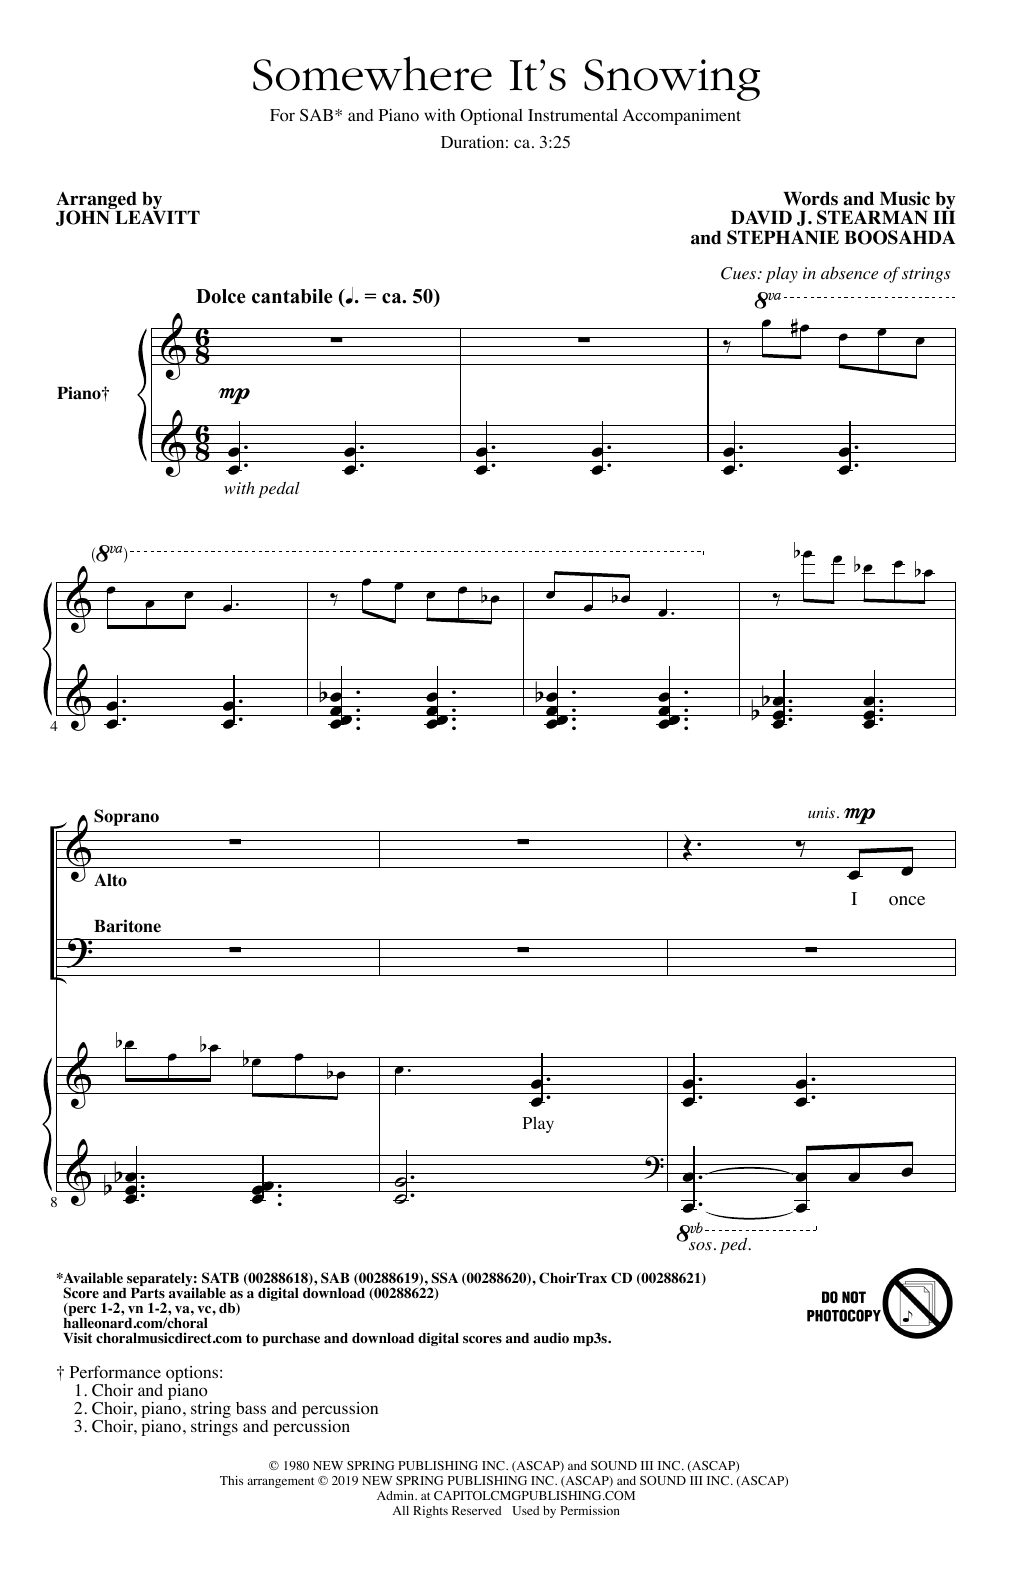 Download David J. Stearman III & Stephanie Boosahda Somewhere It's Snowing (arr. John Leavitt) Sheet Music and learn how to play SATB Choir PDF digital score in minutes